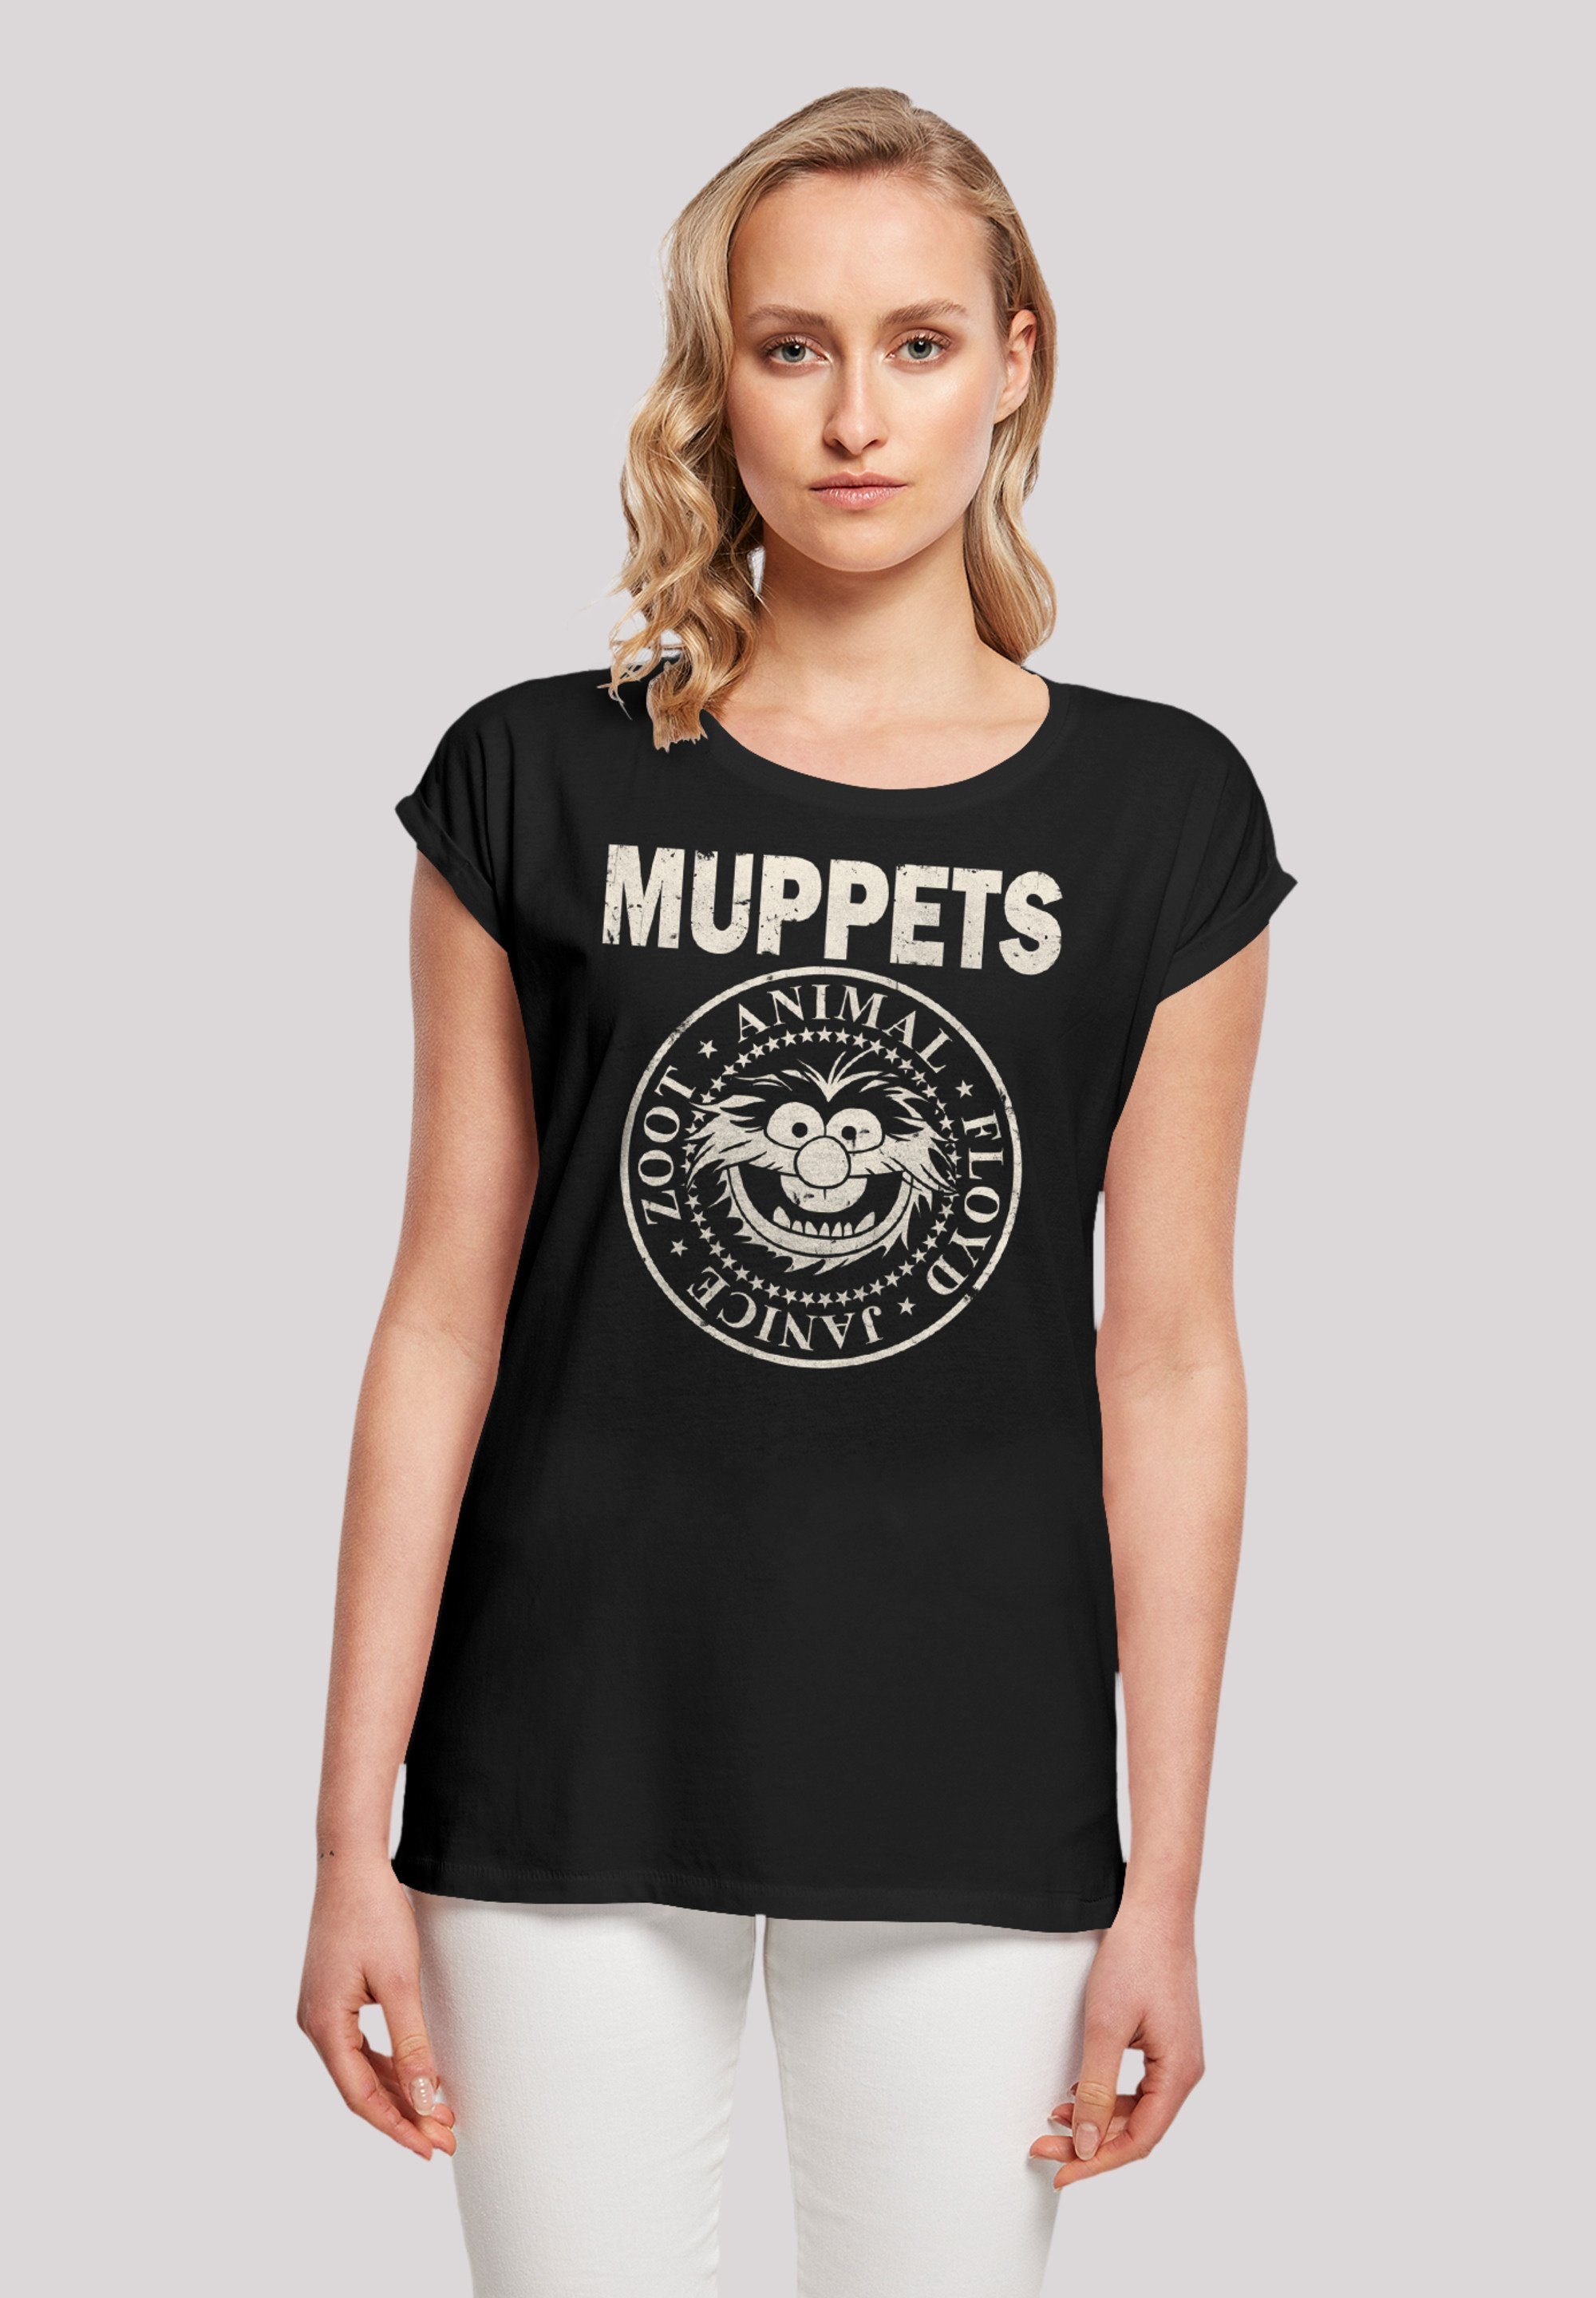 F4NT4STIC T-Shirt Disney Muppets Premium Qualität R'N'R